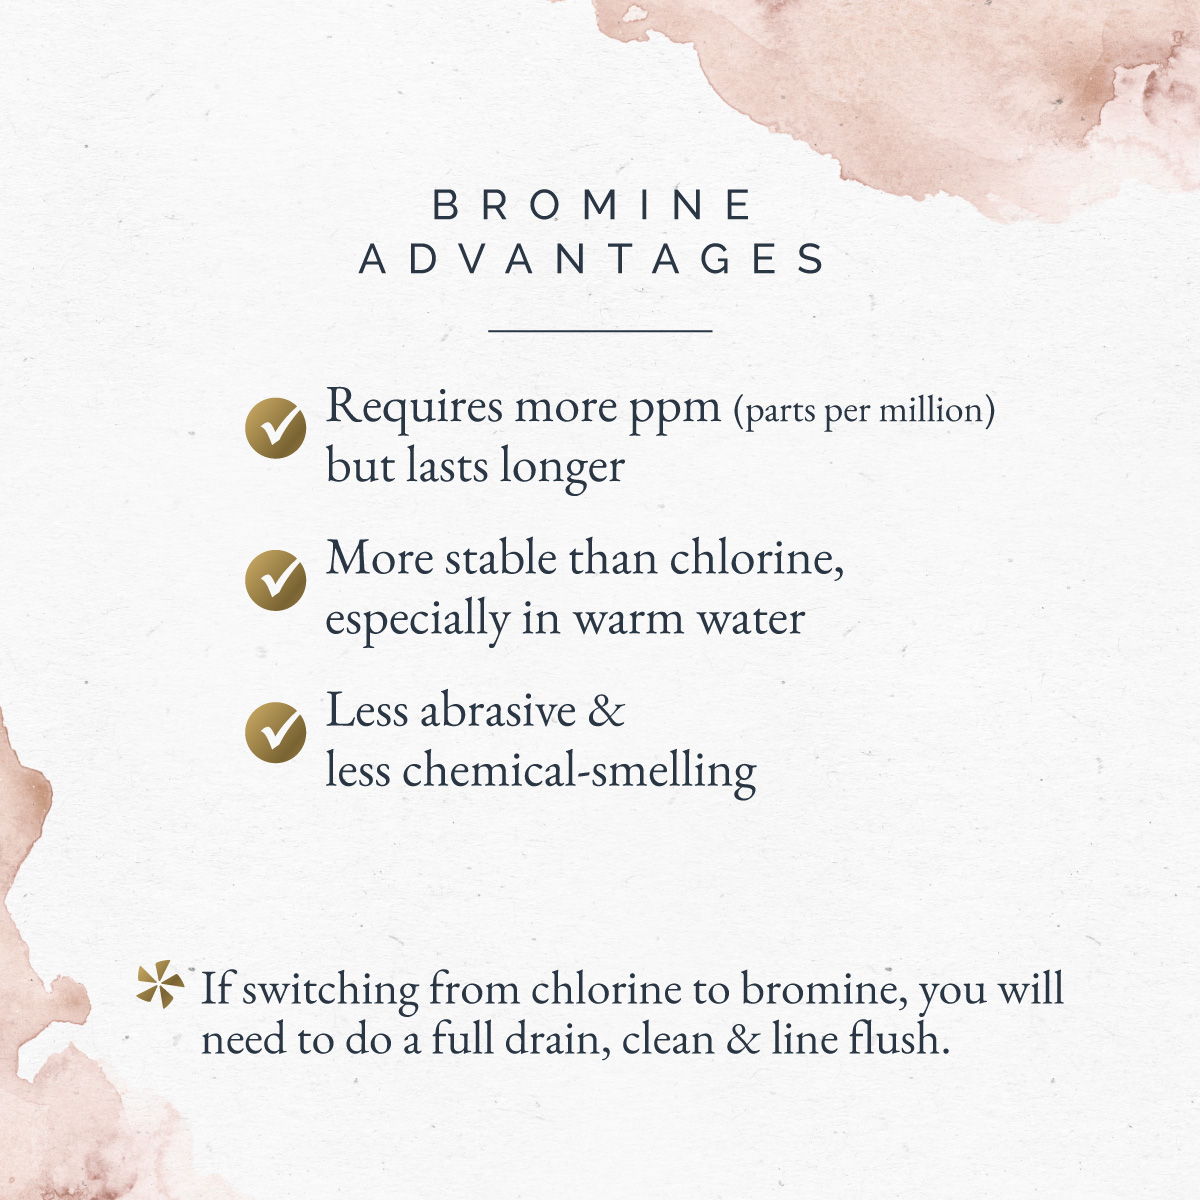 Bromine advantages chart